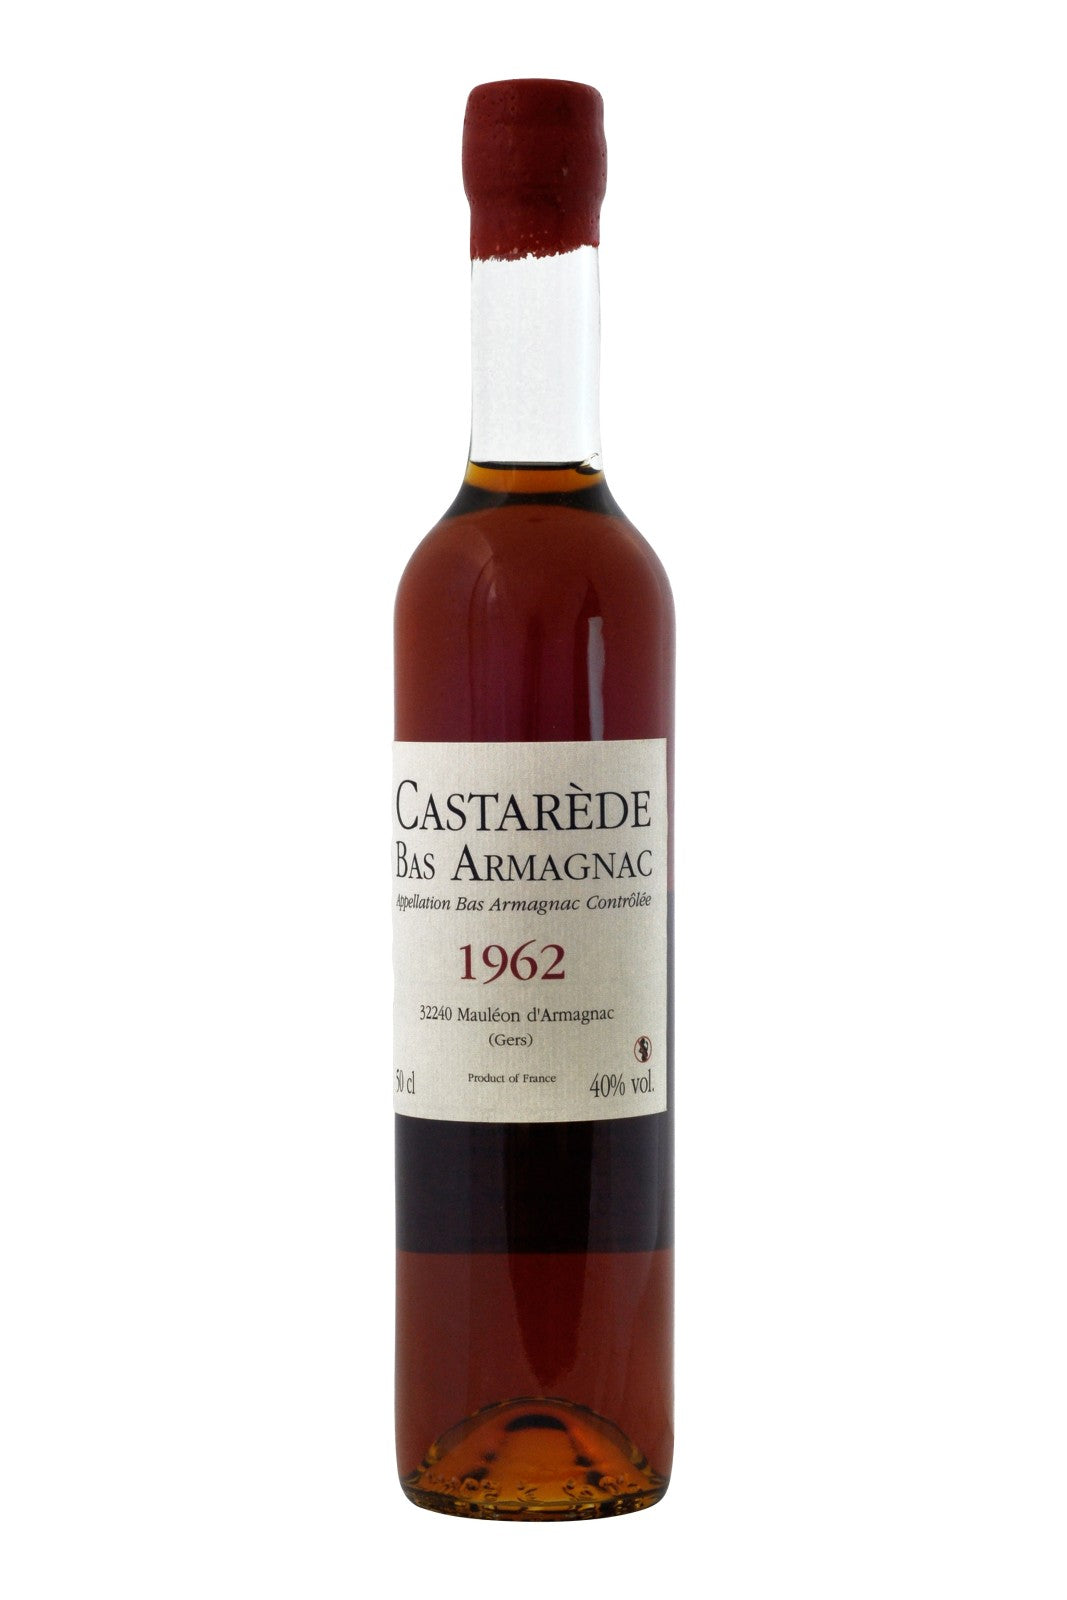 Castarede 1962